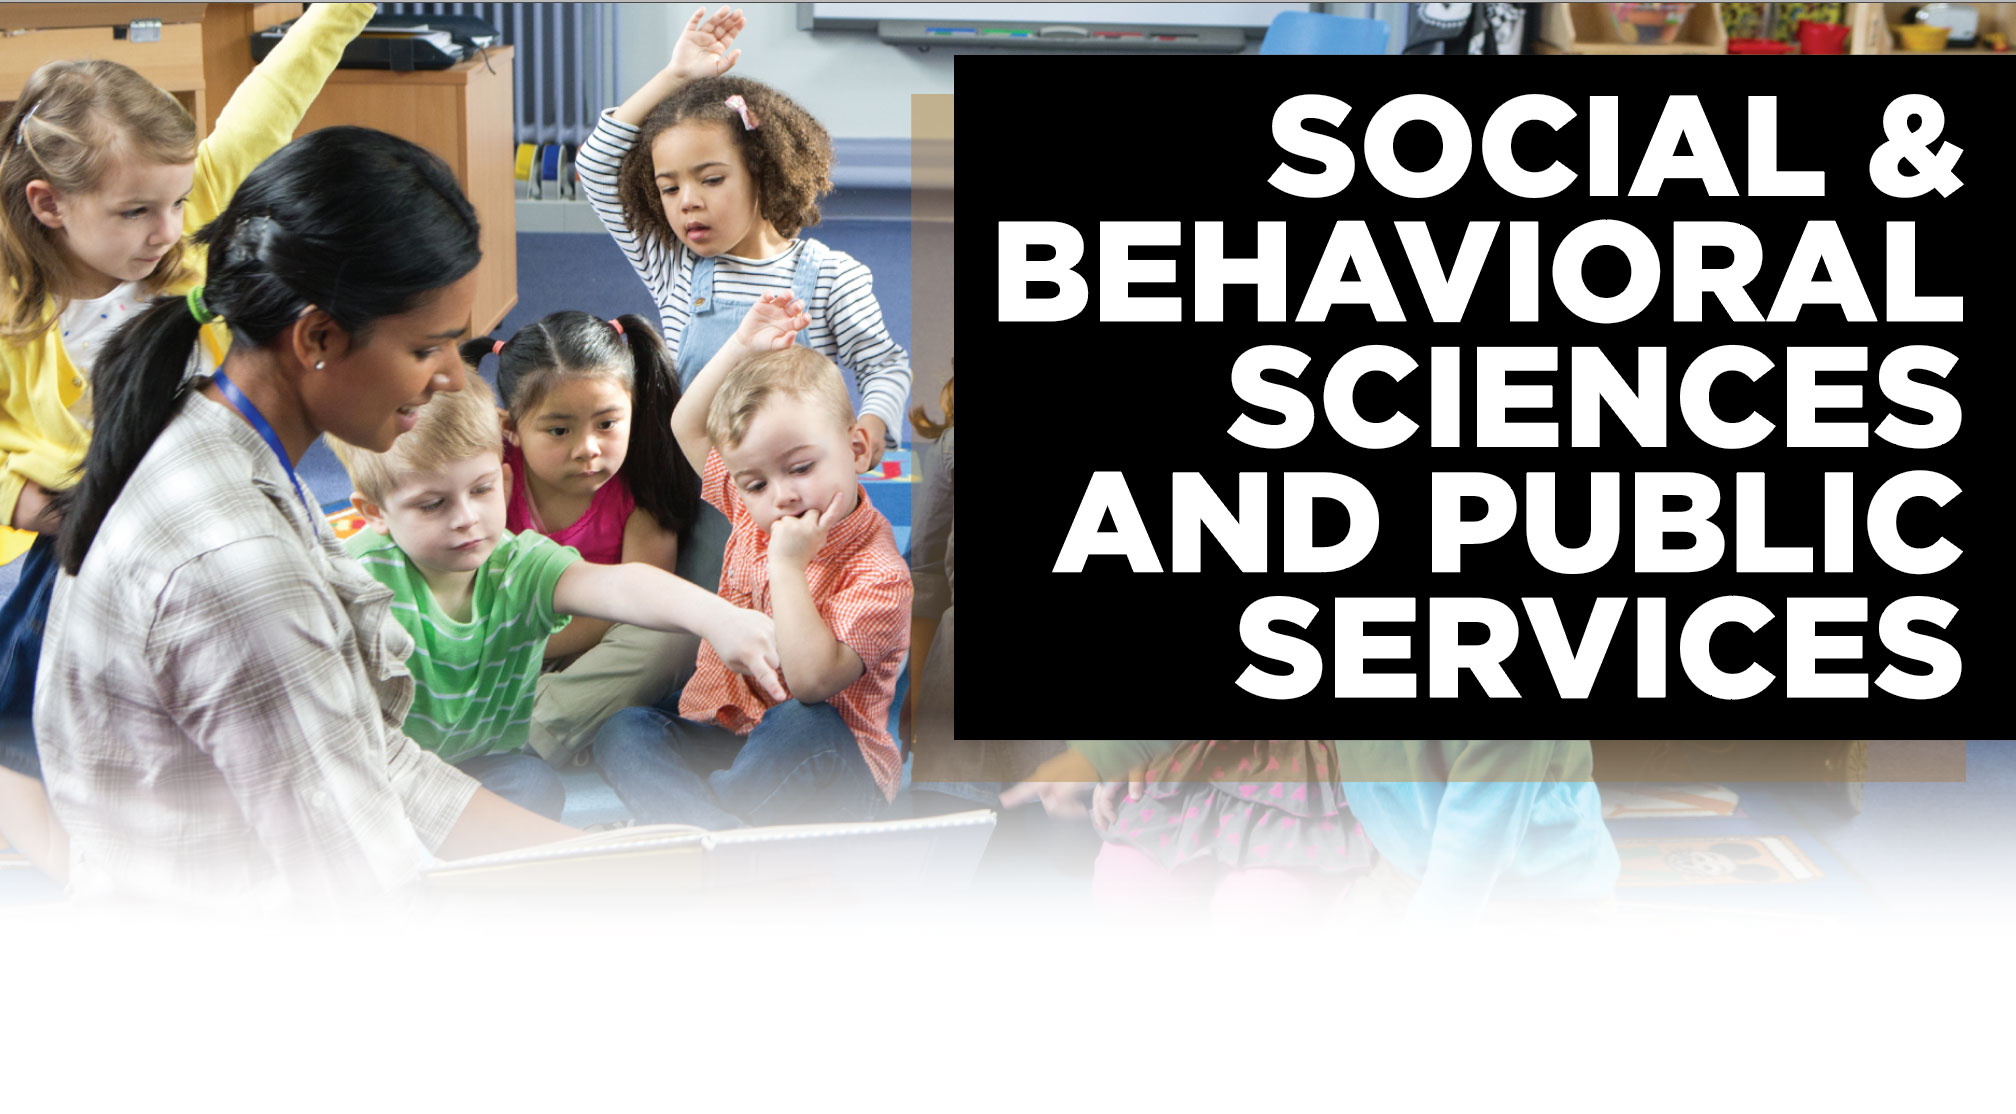 Social & Behavioral Sciences and Public Services